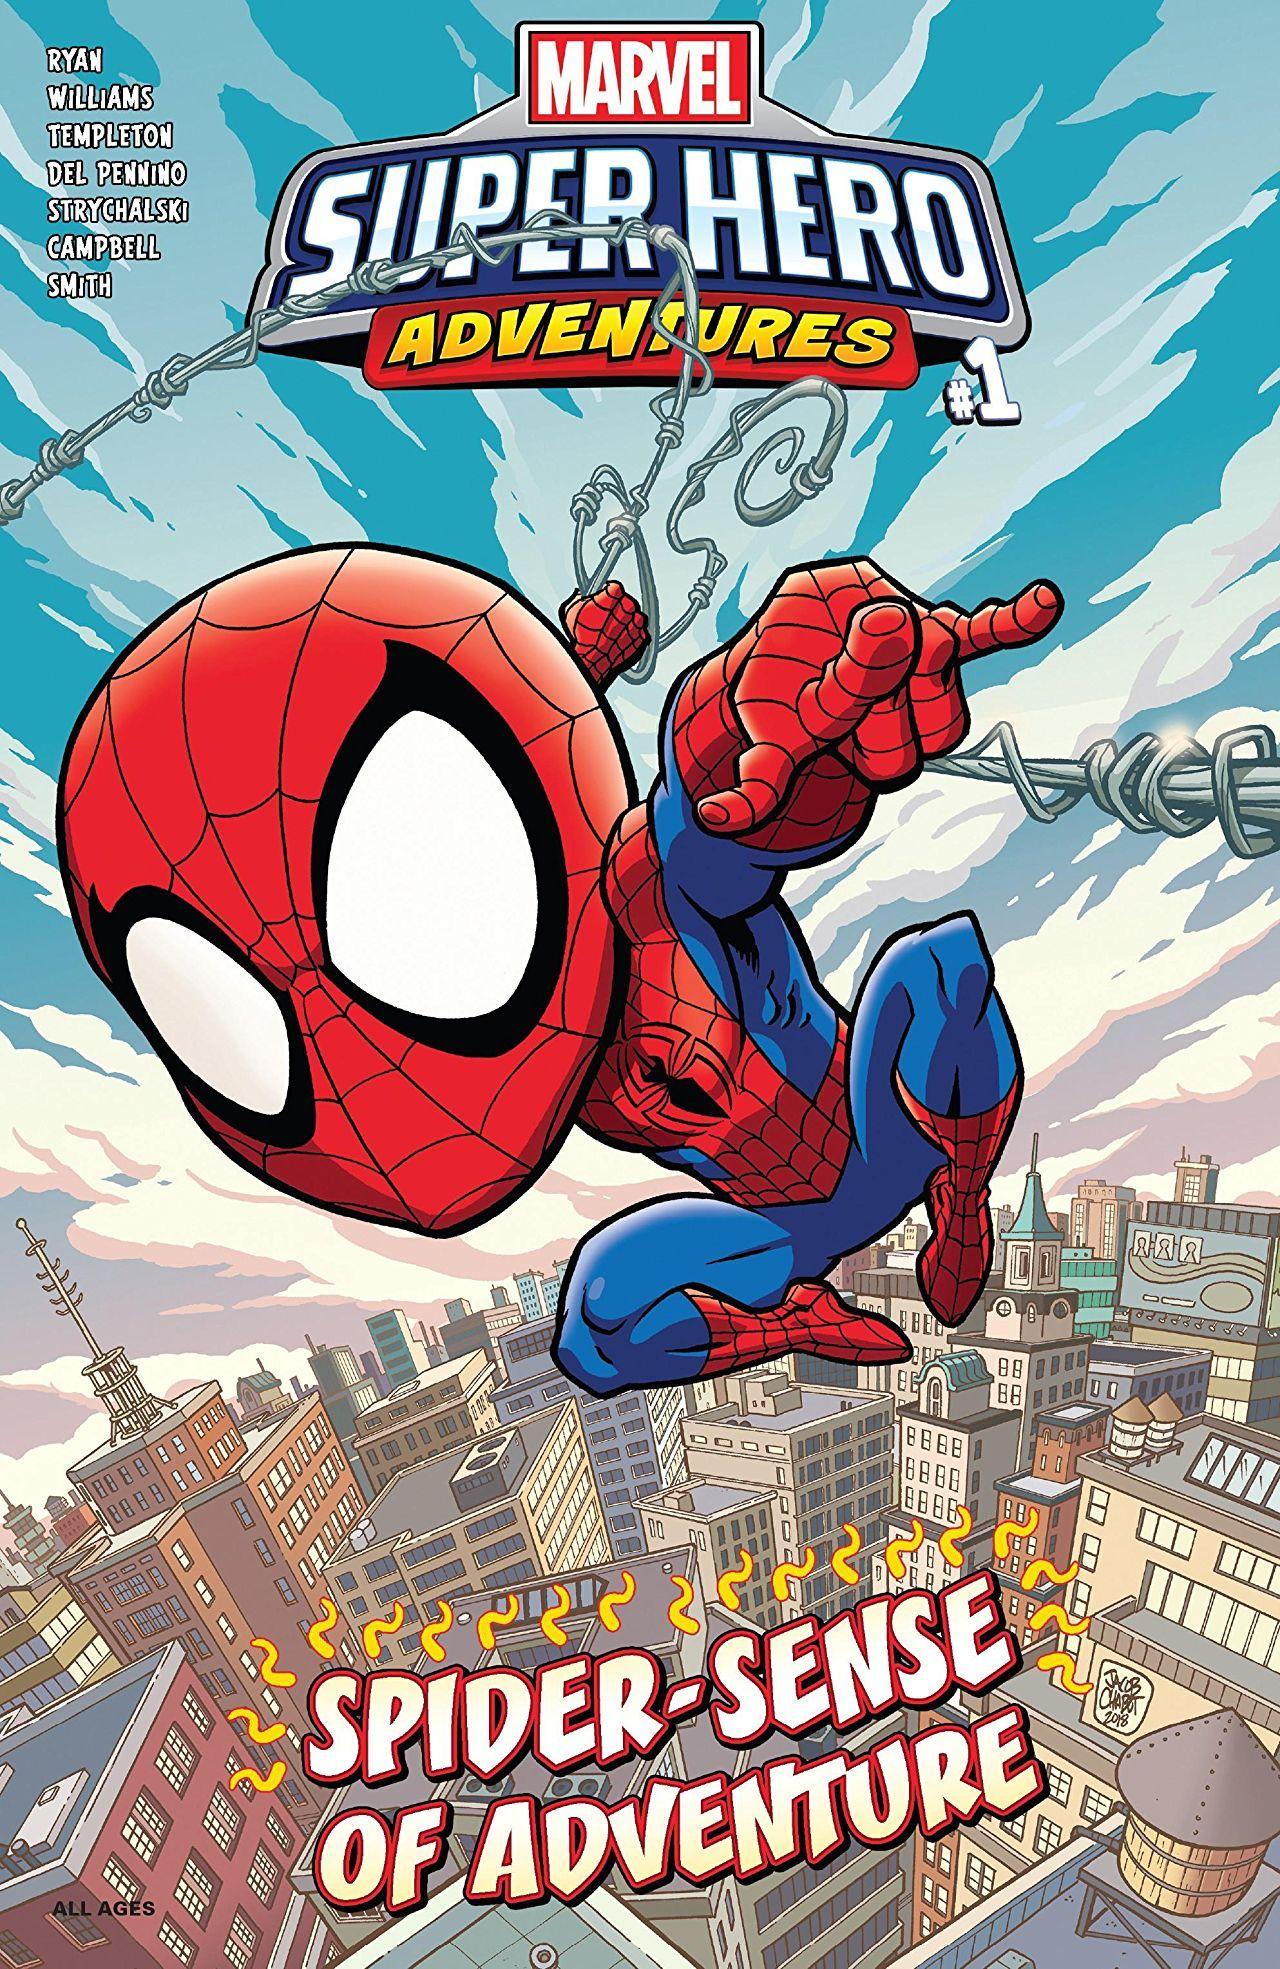 Marvel Super Hero Adventures: Spider-Man - Spider-Sense of Adventure Vol. 1 #1